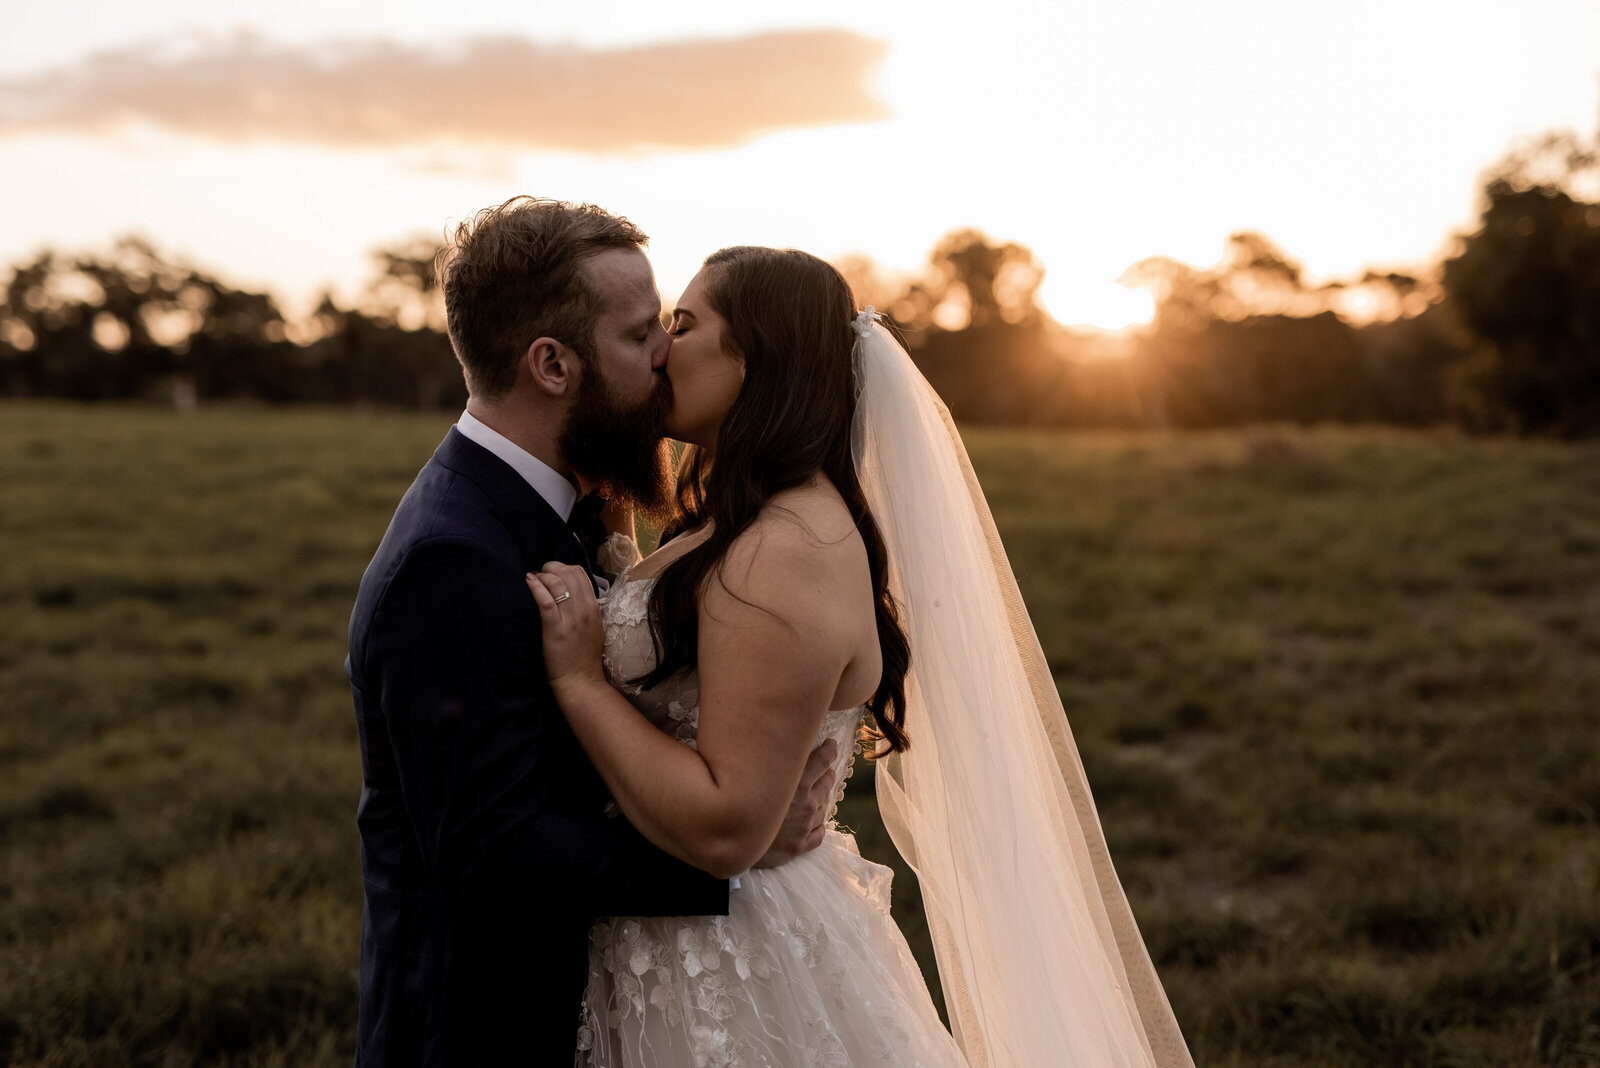 Jazmyn-Thomas-Rexvil-Photography-Adelaide-Wedding-Photographer-451